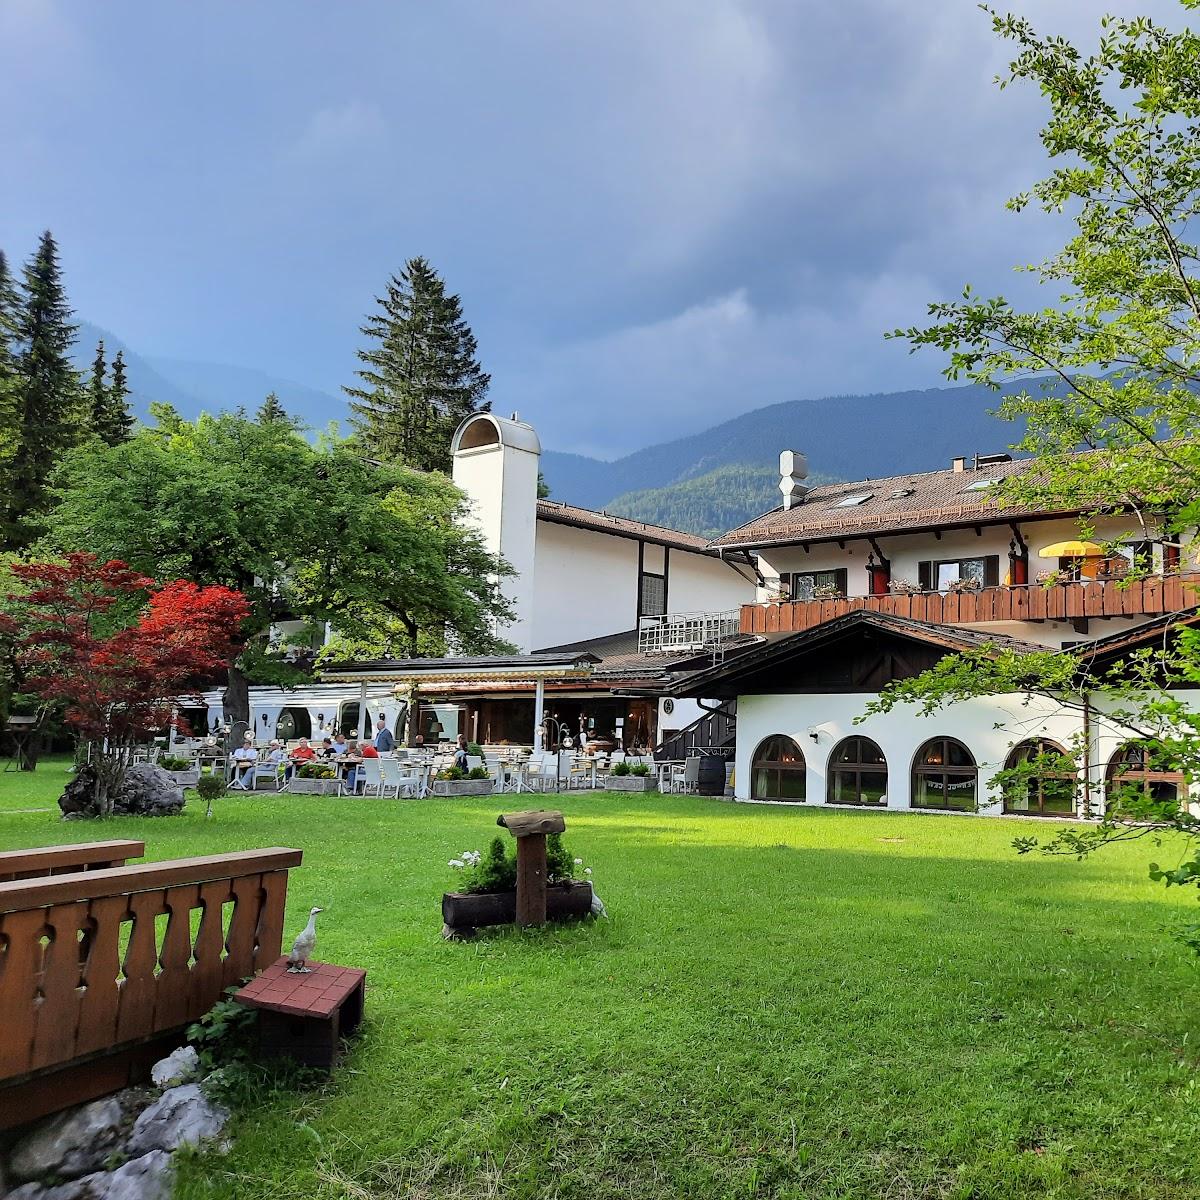 Restaurant "Alpenhof" in Grainau